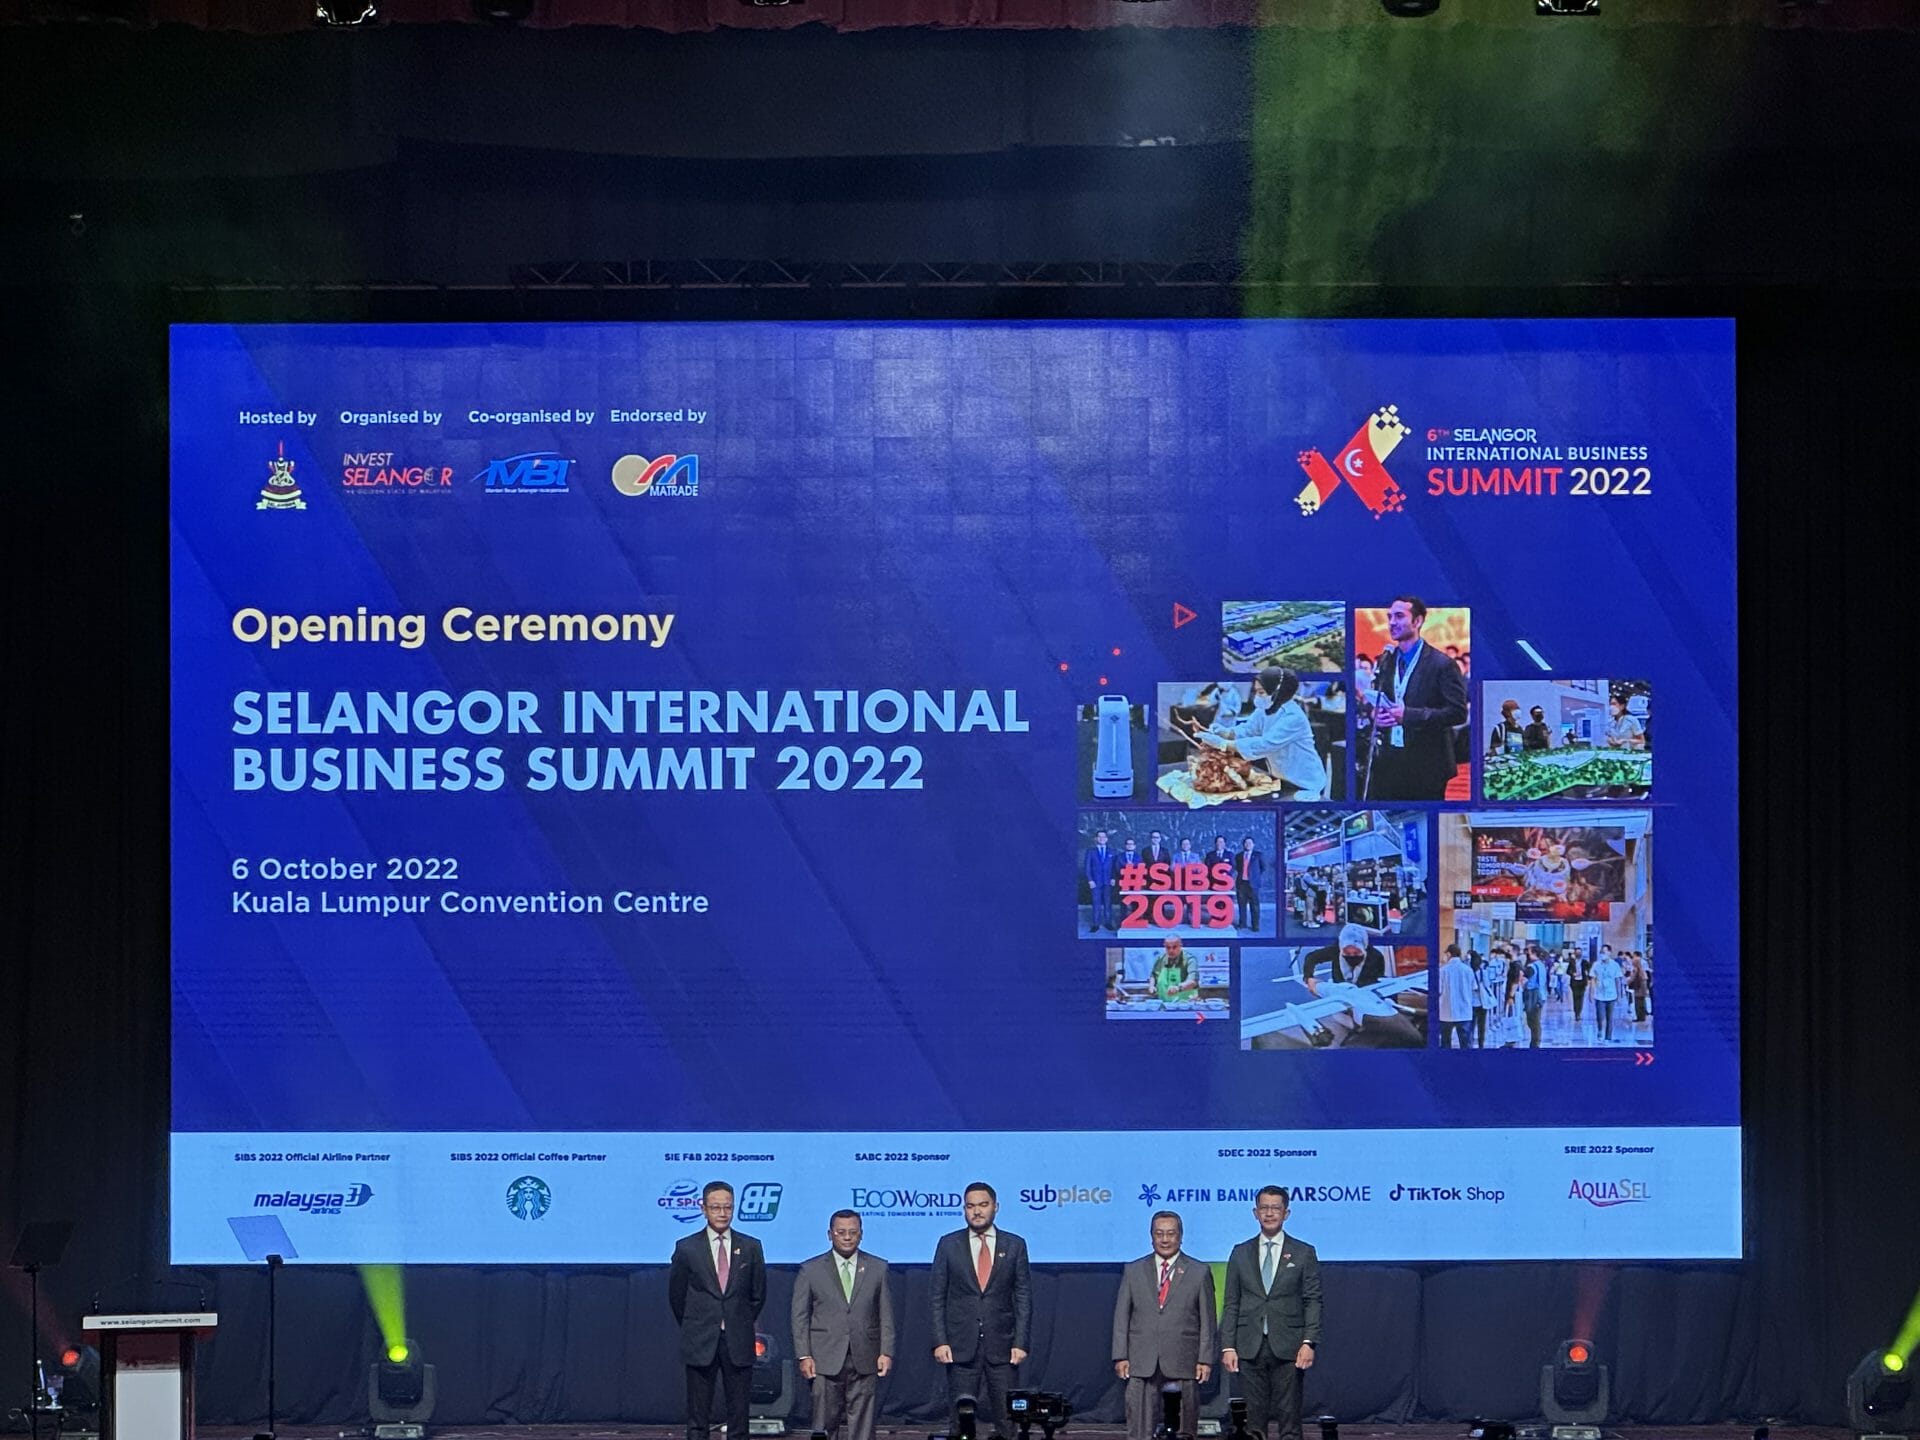 Selangor International Business Summit 2022 Showcases Its